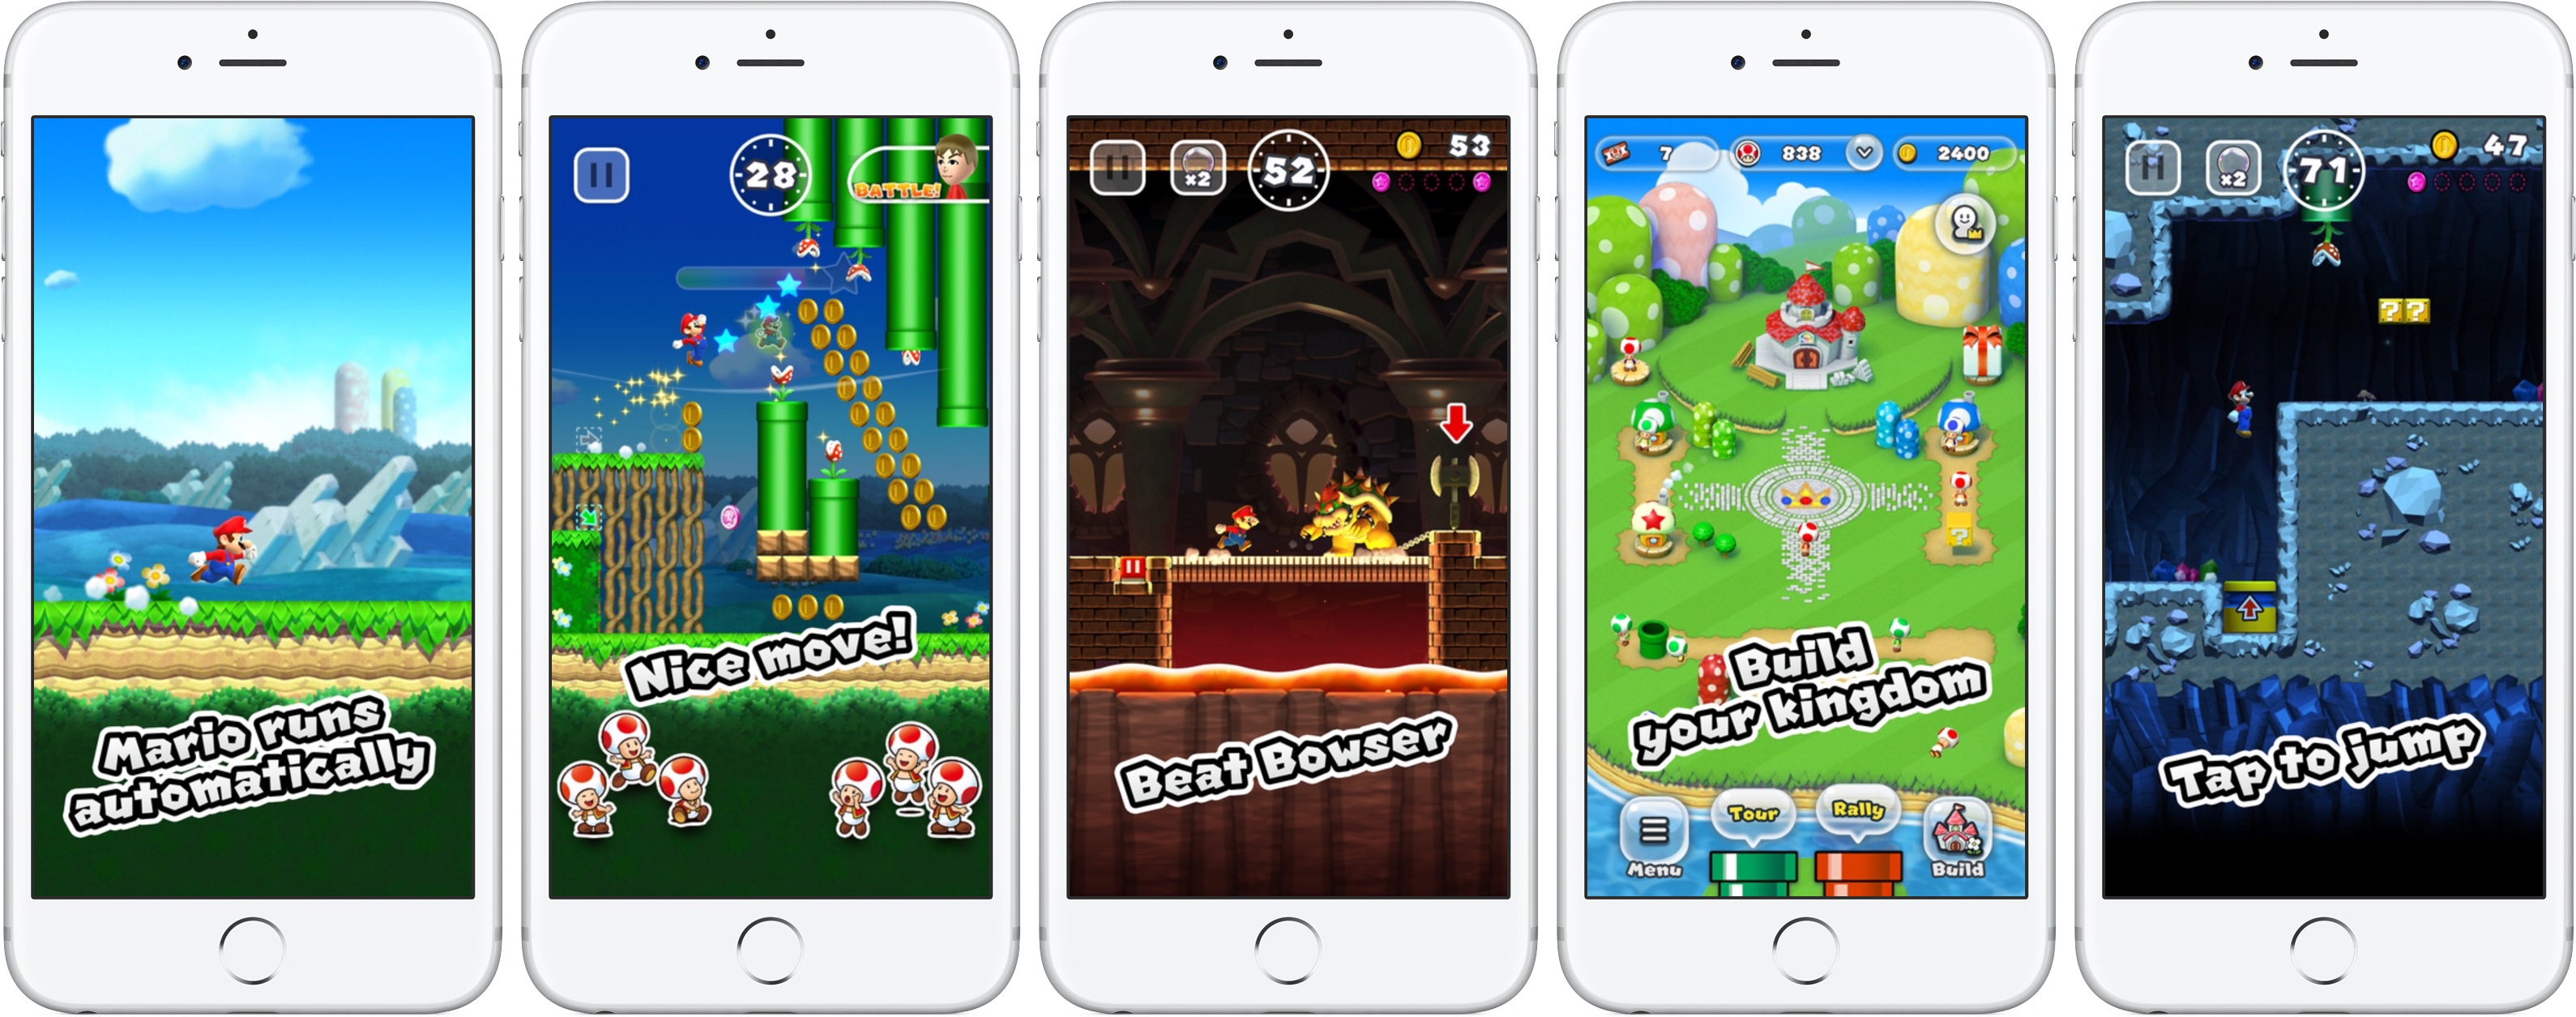 Super Mario Run for iOS iPhone screenshot 001